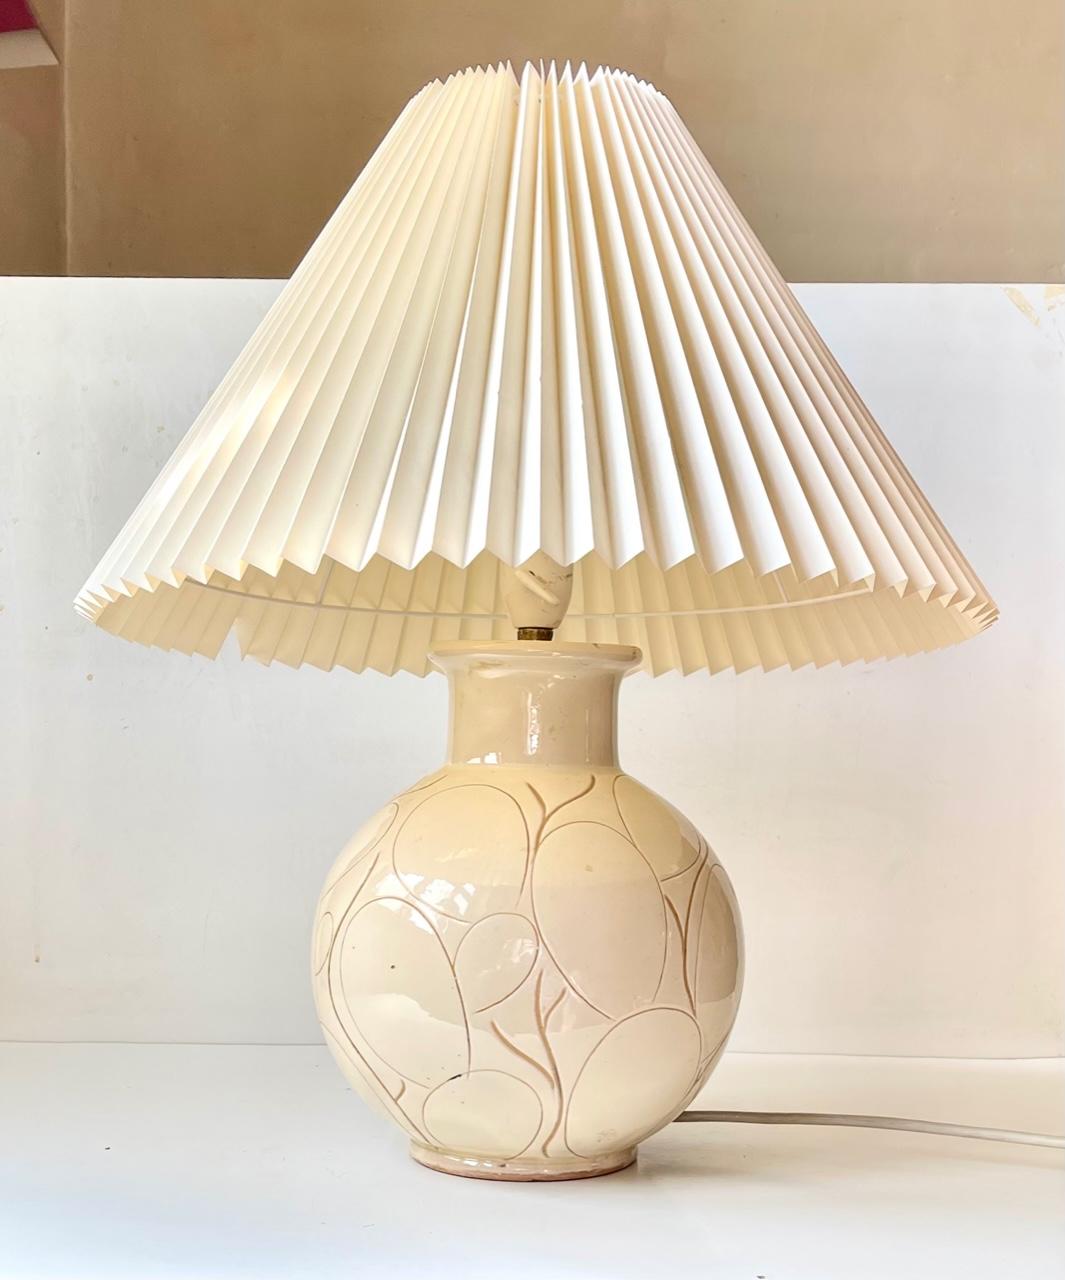 Art Nouveau Herman A. Kähler Ceramic Table Lamp in Creme Glaze, 1920s For Sale